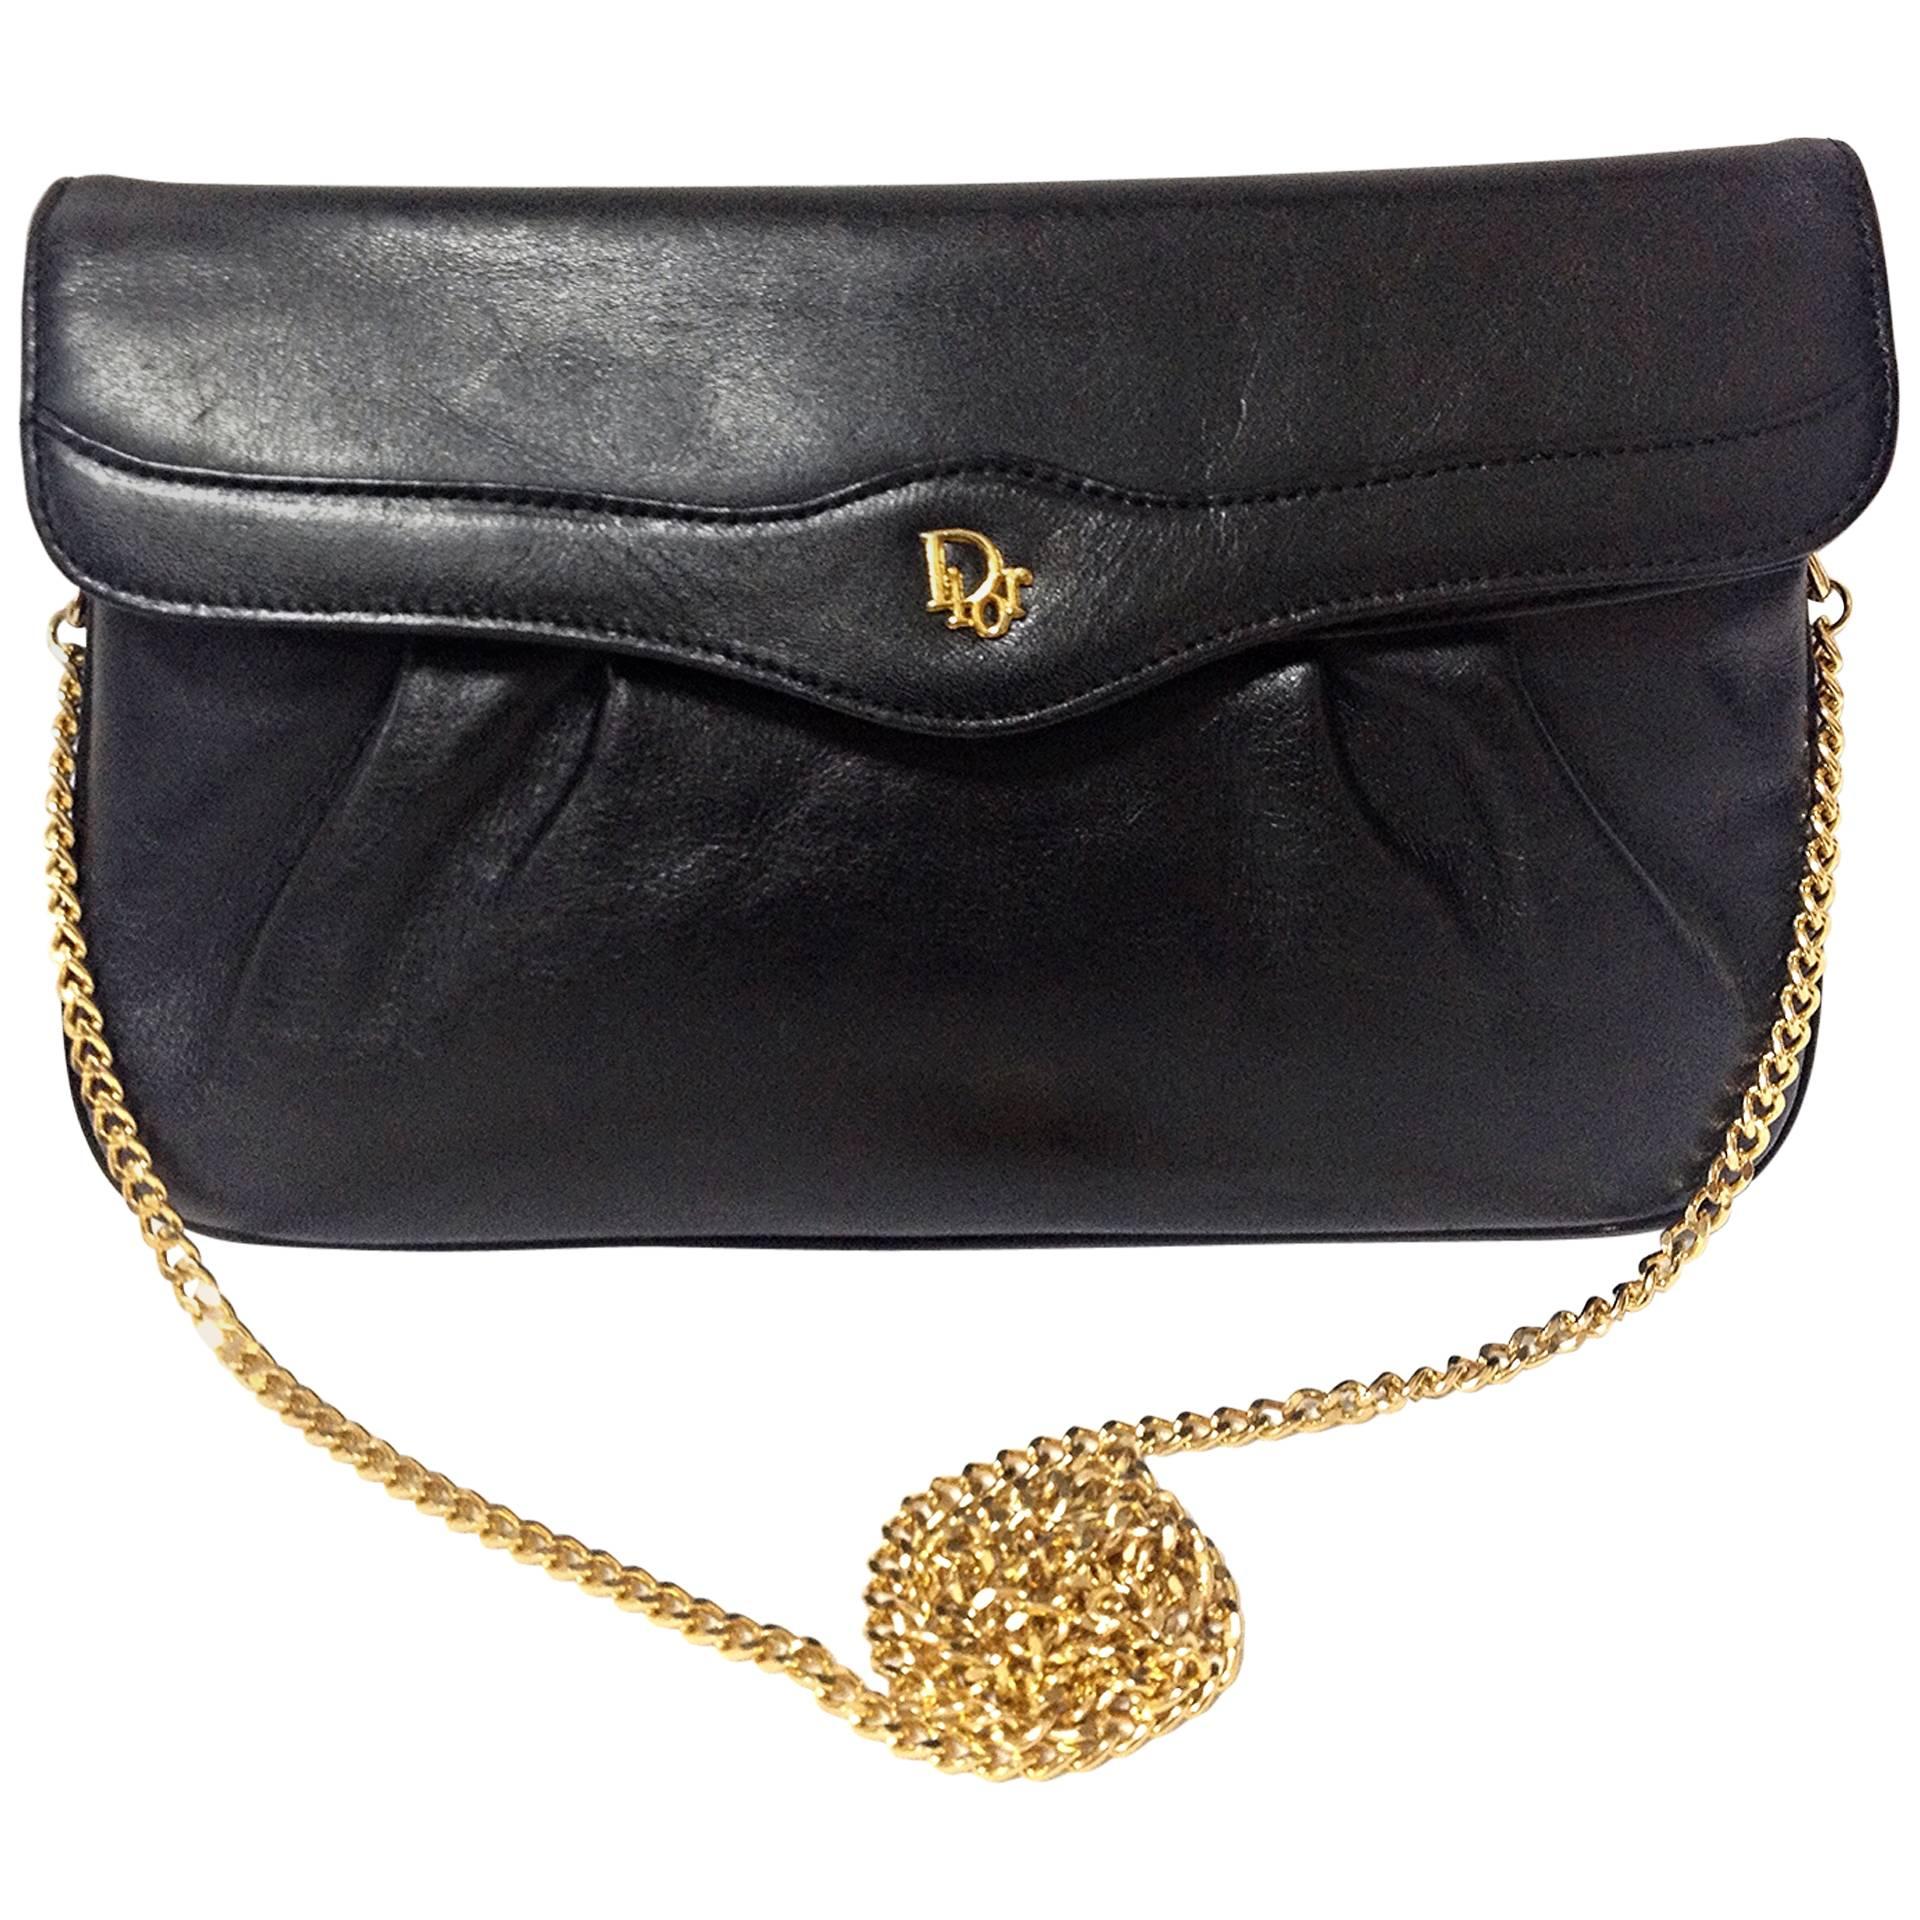 Vintage Christian Dior Vintage black leather clutch purse, mini bag, with chain.